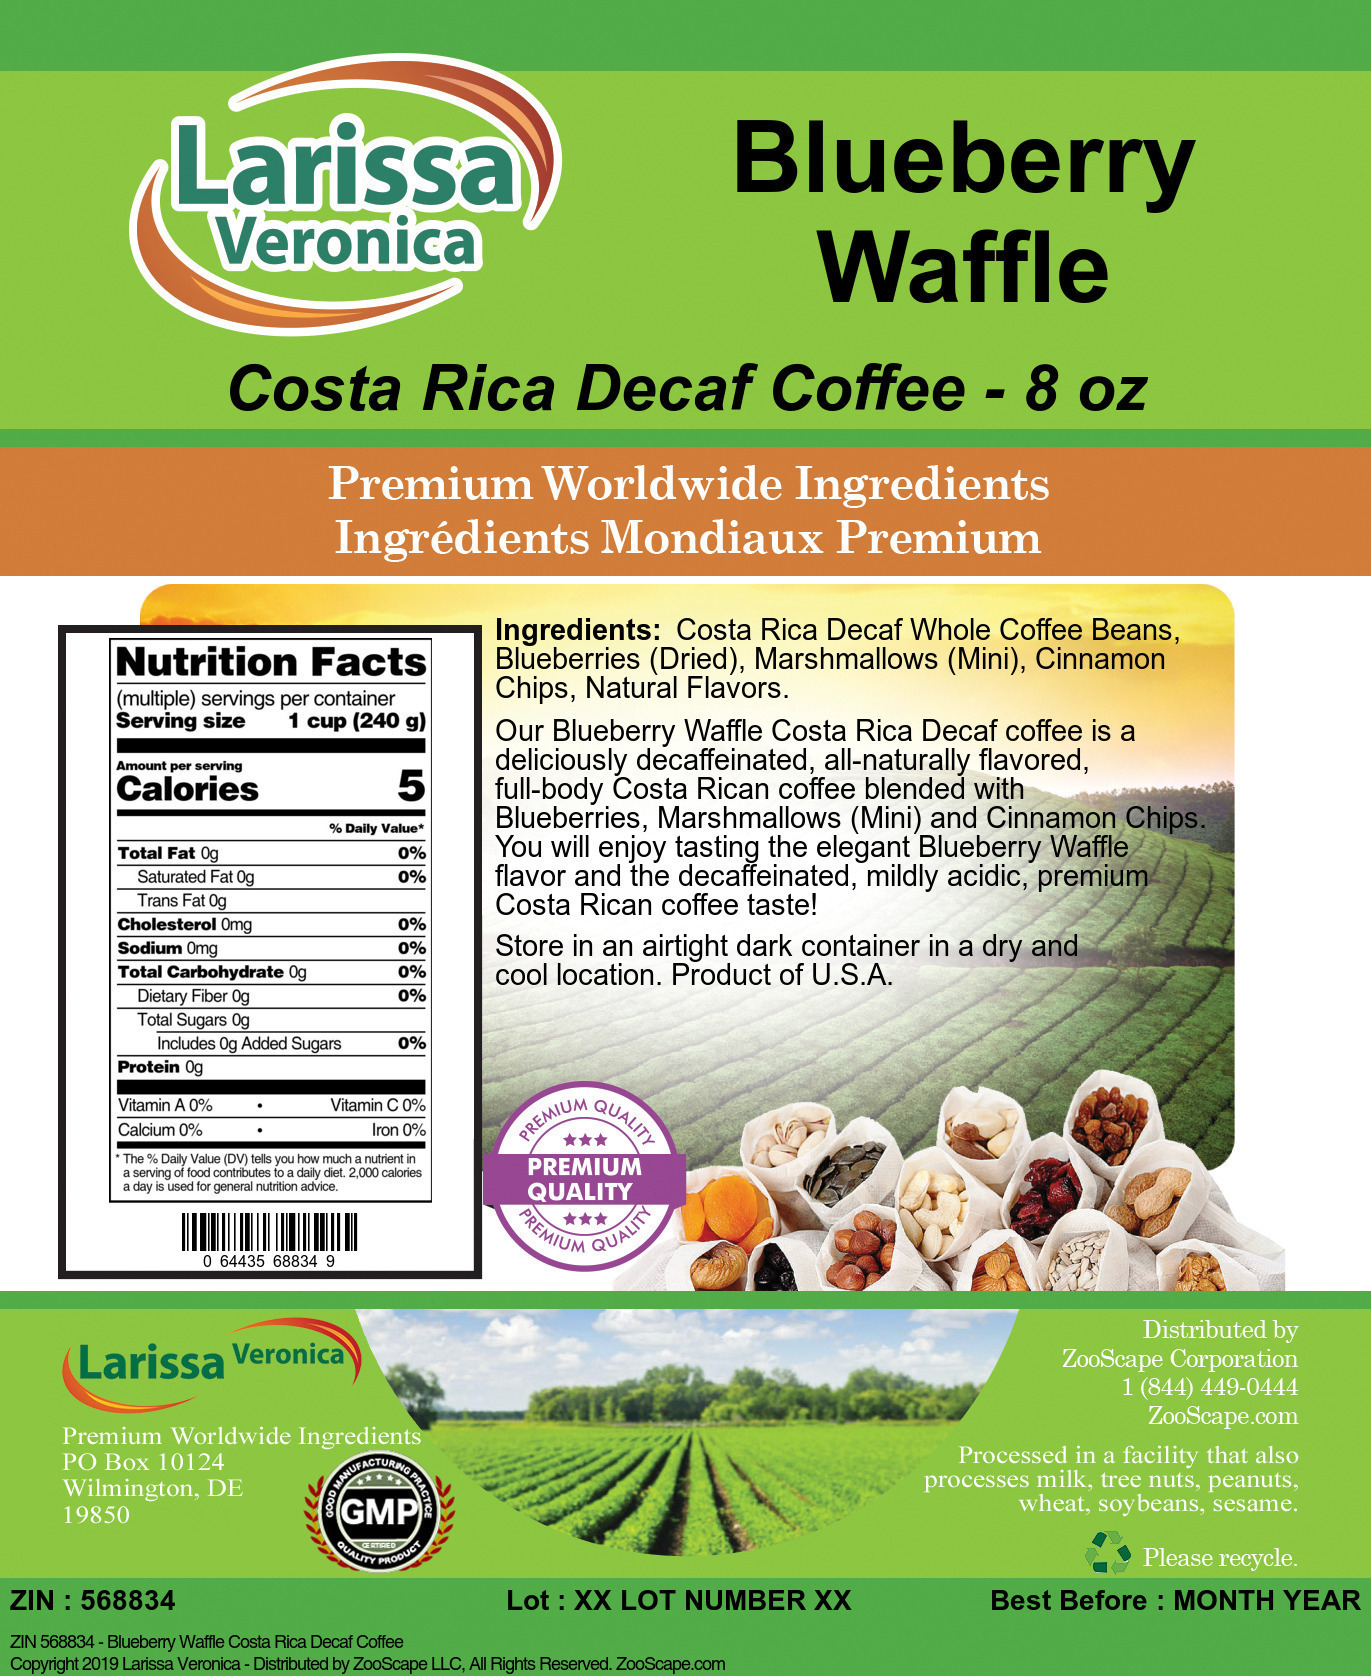 Blueberry Waffle Costa Rica Decaf Coffee - Label